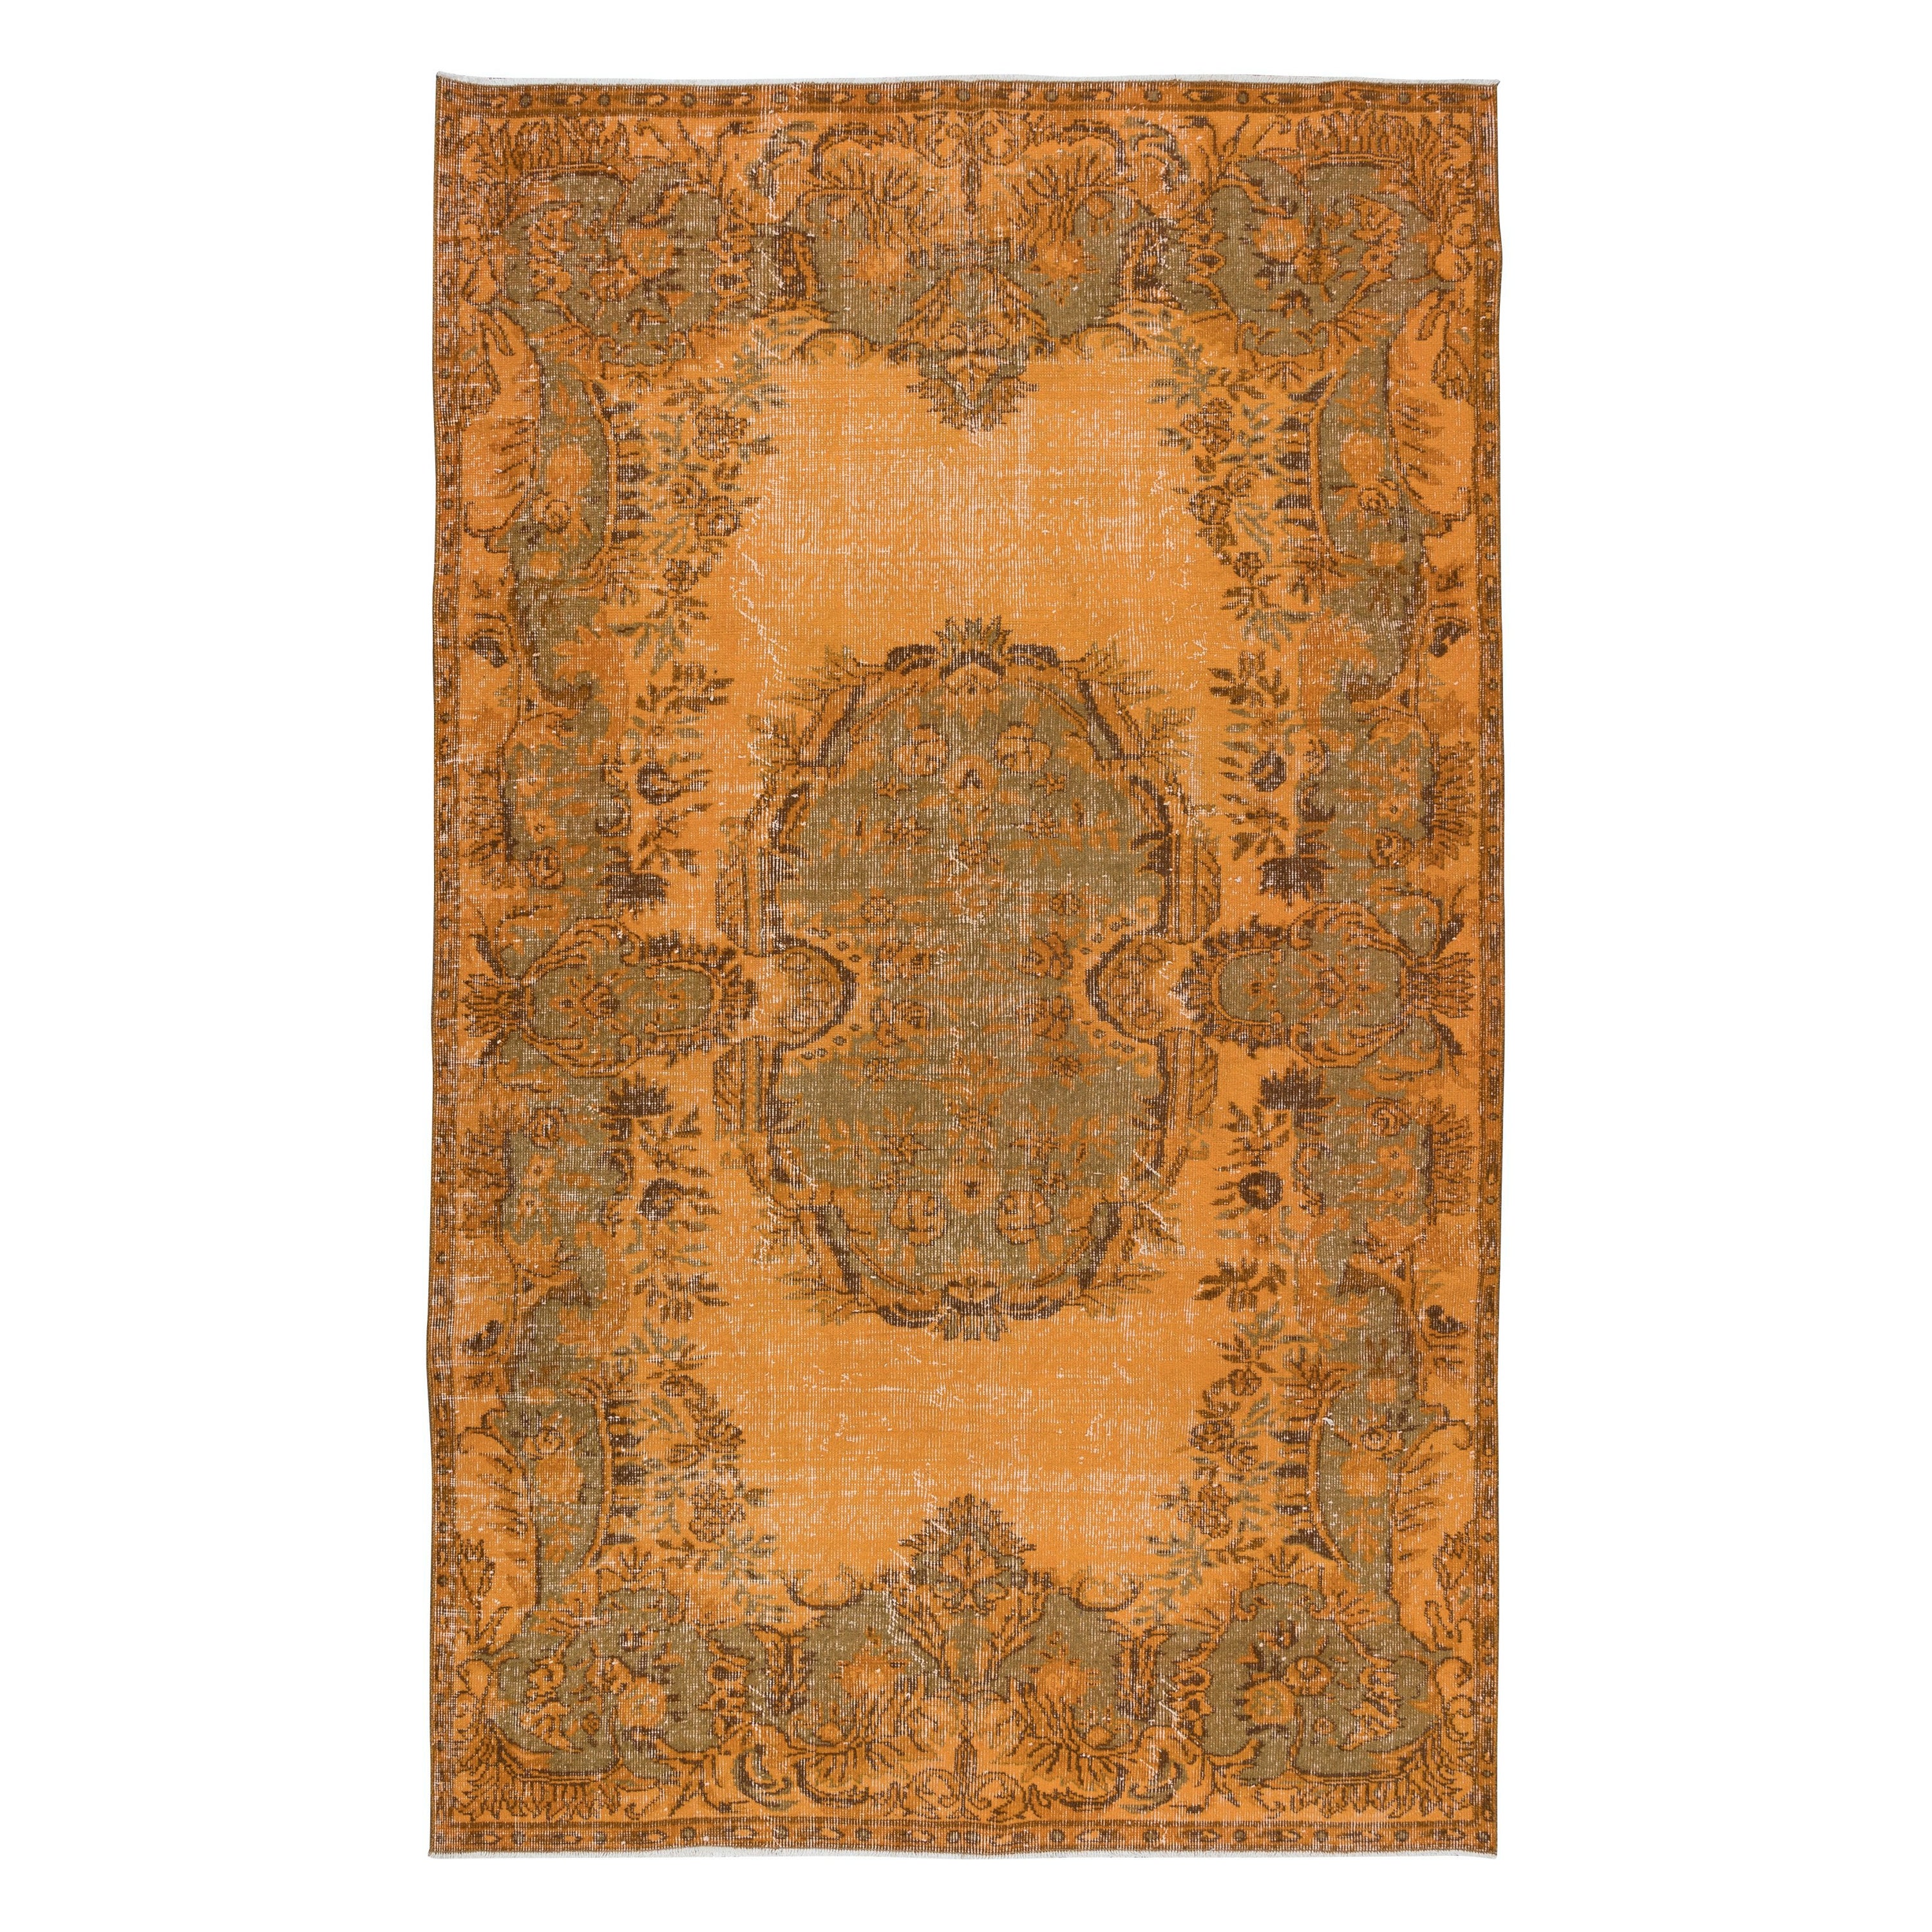 6x9.8 Ft French Aubusson Rug in Orange, Handmade Turkish Carpet